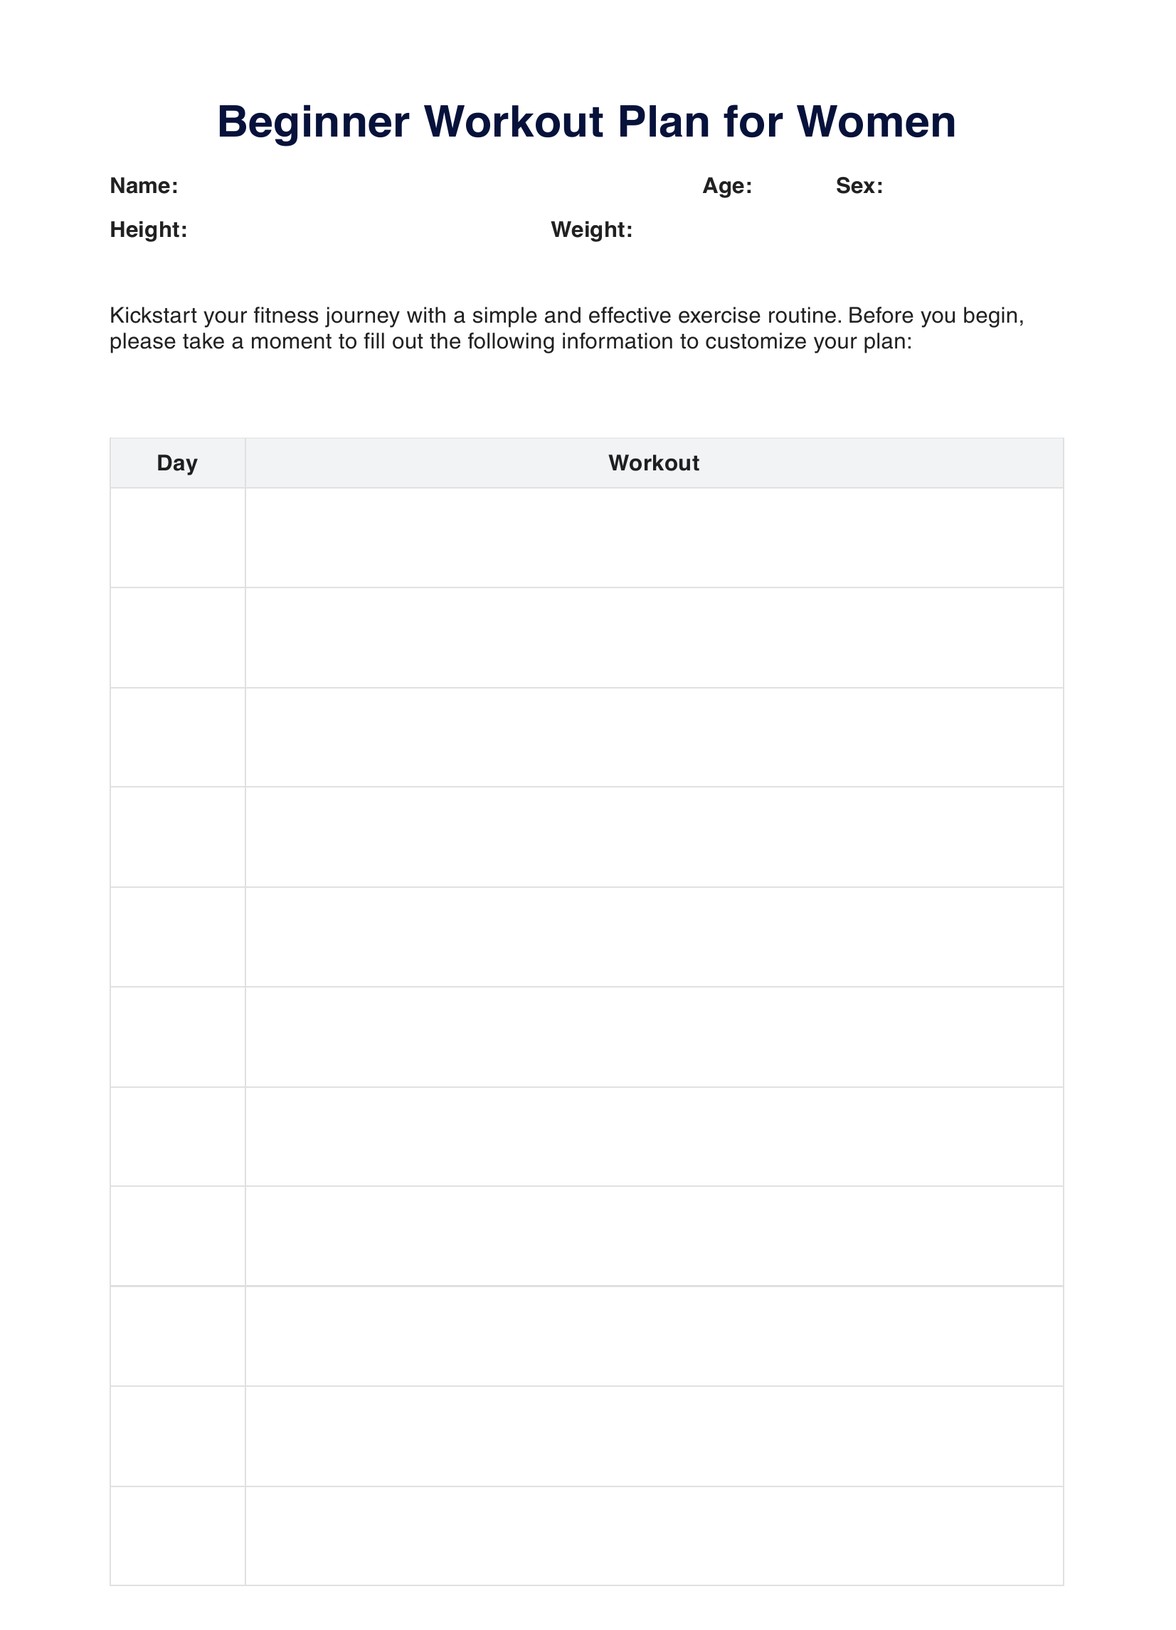 Beginner Workout Plan for Women PDF Example